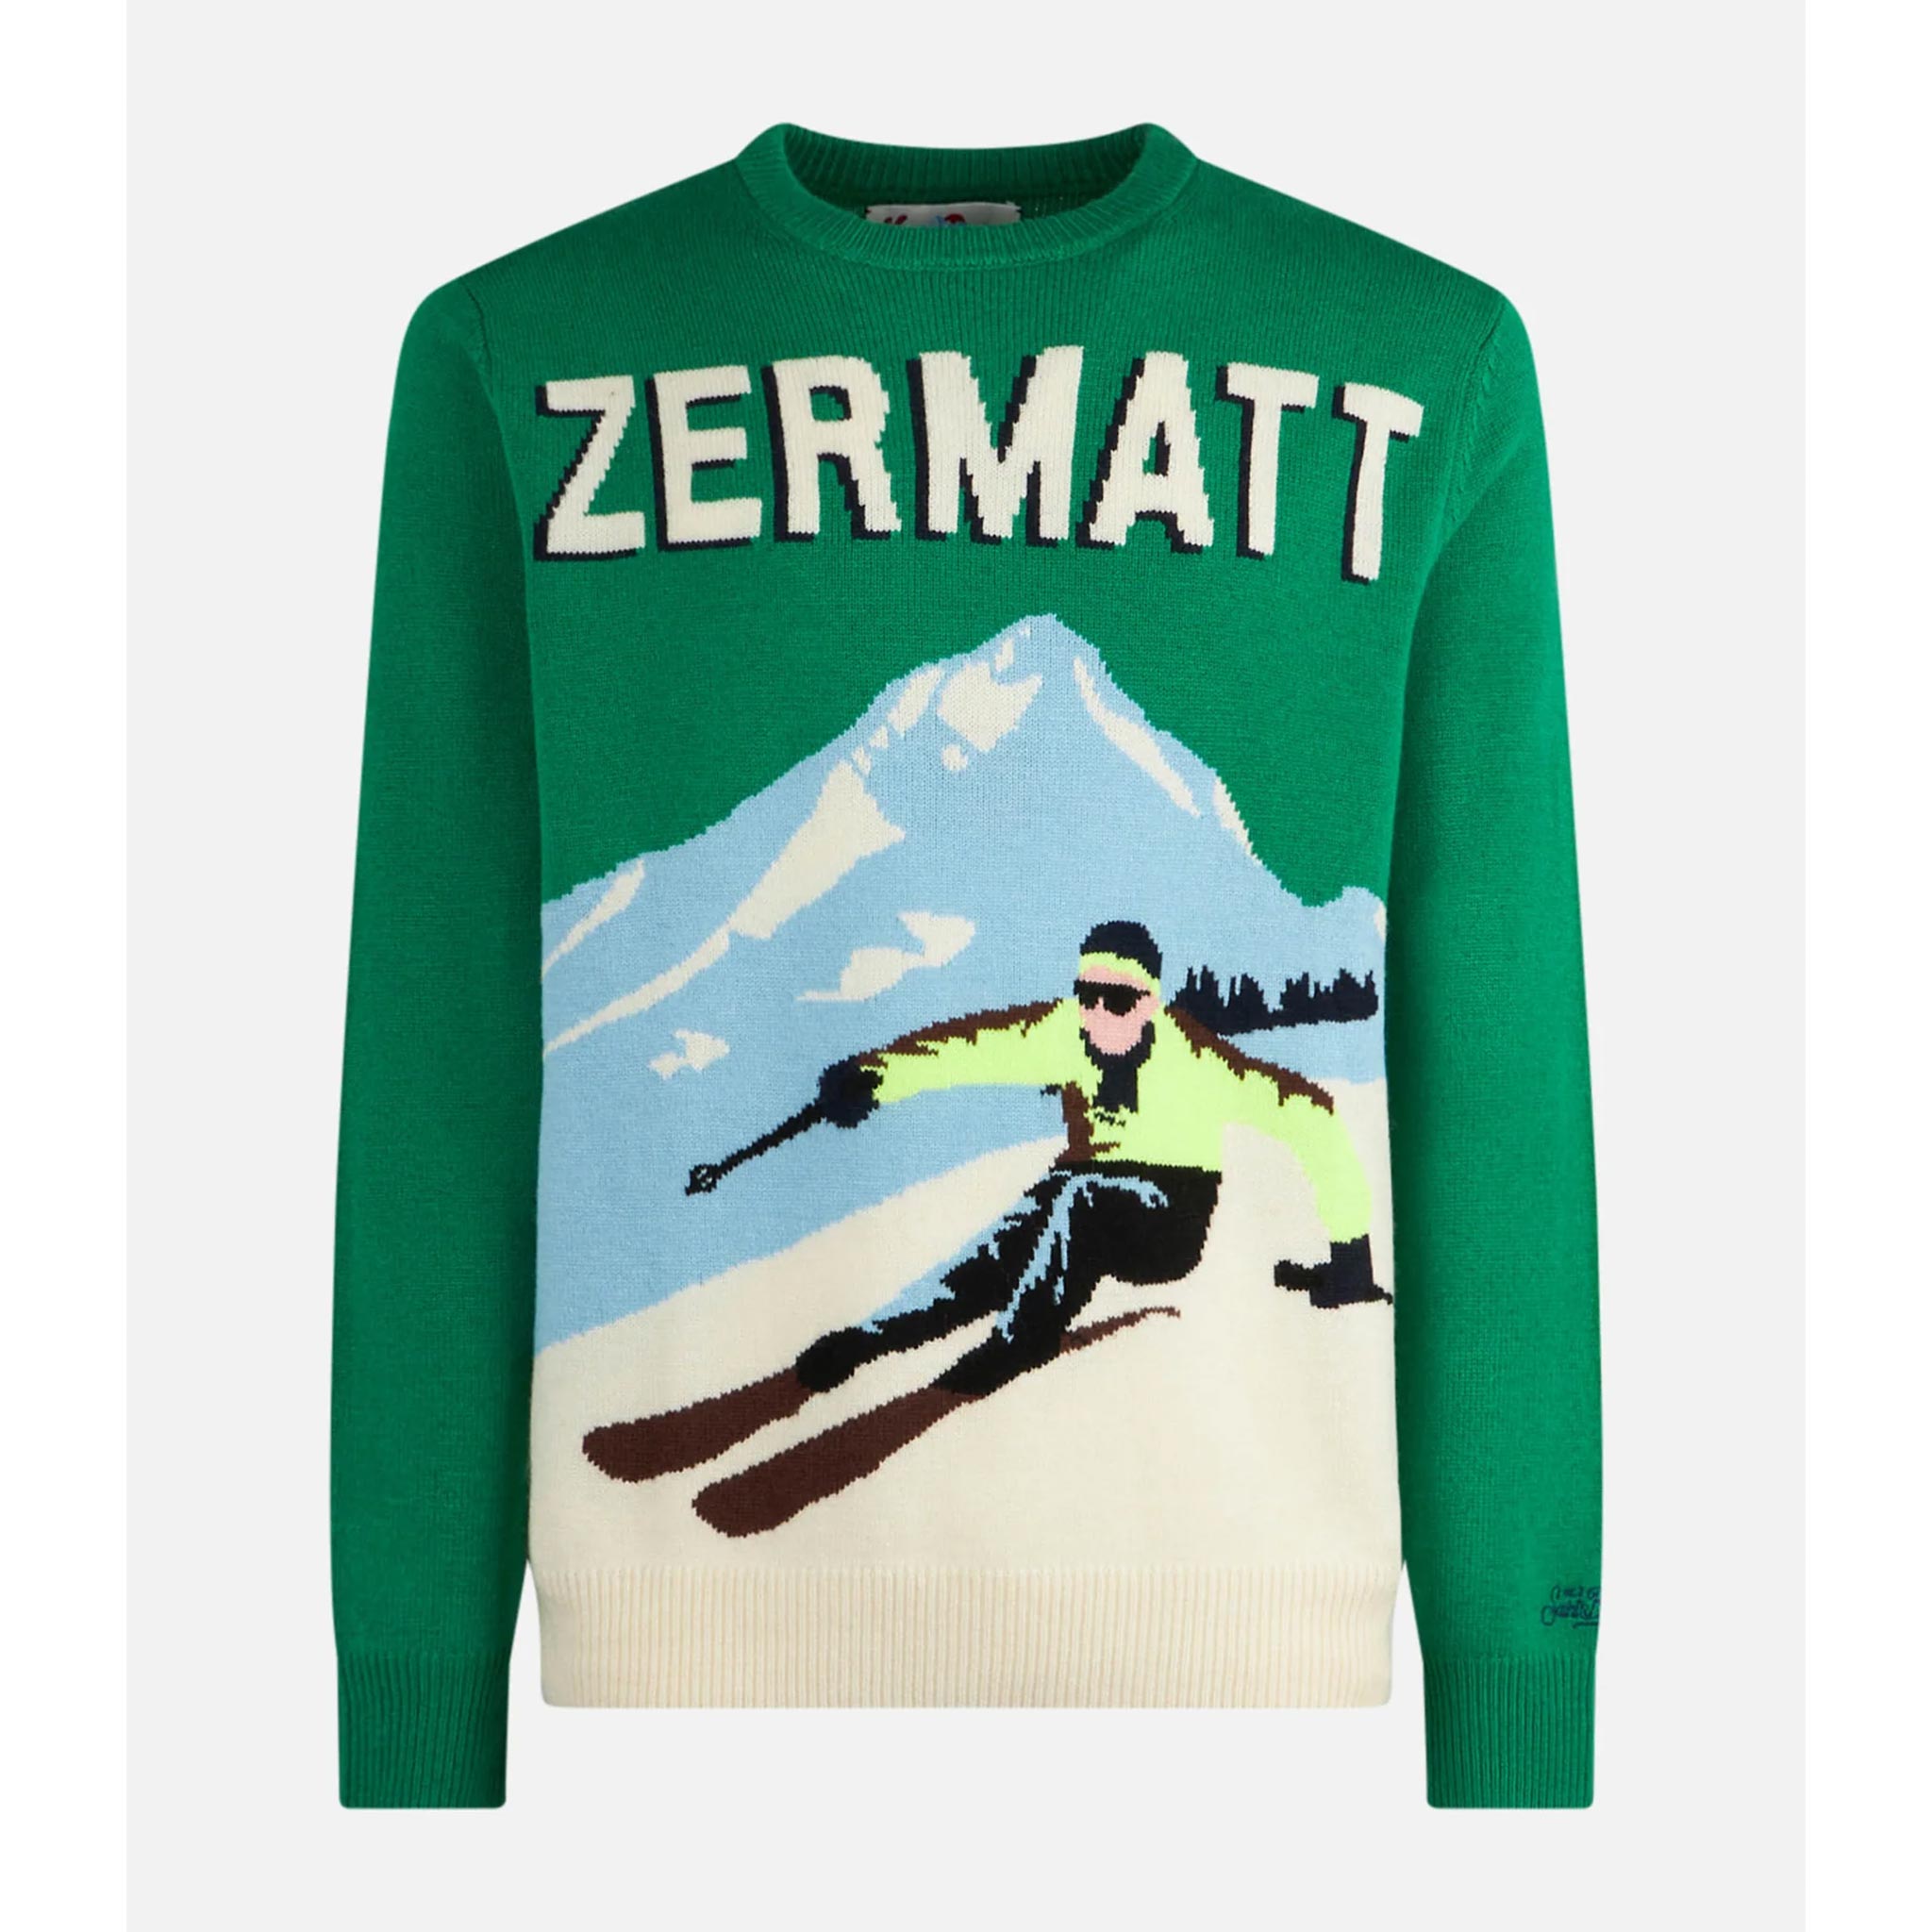 Zermatt Ski Sweater